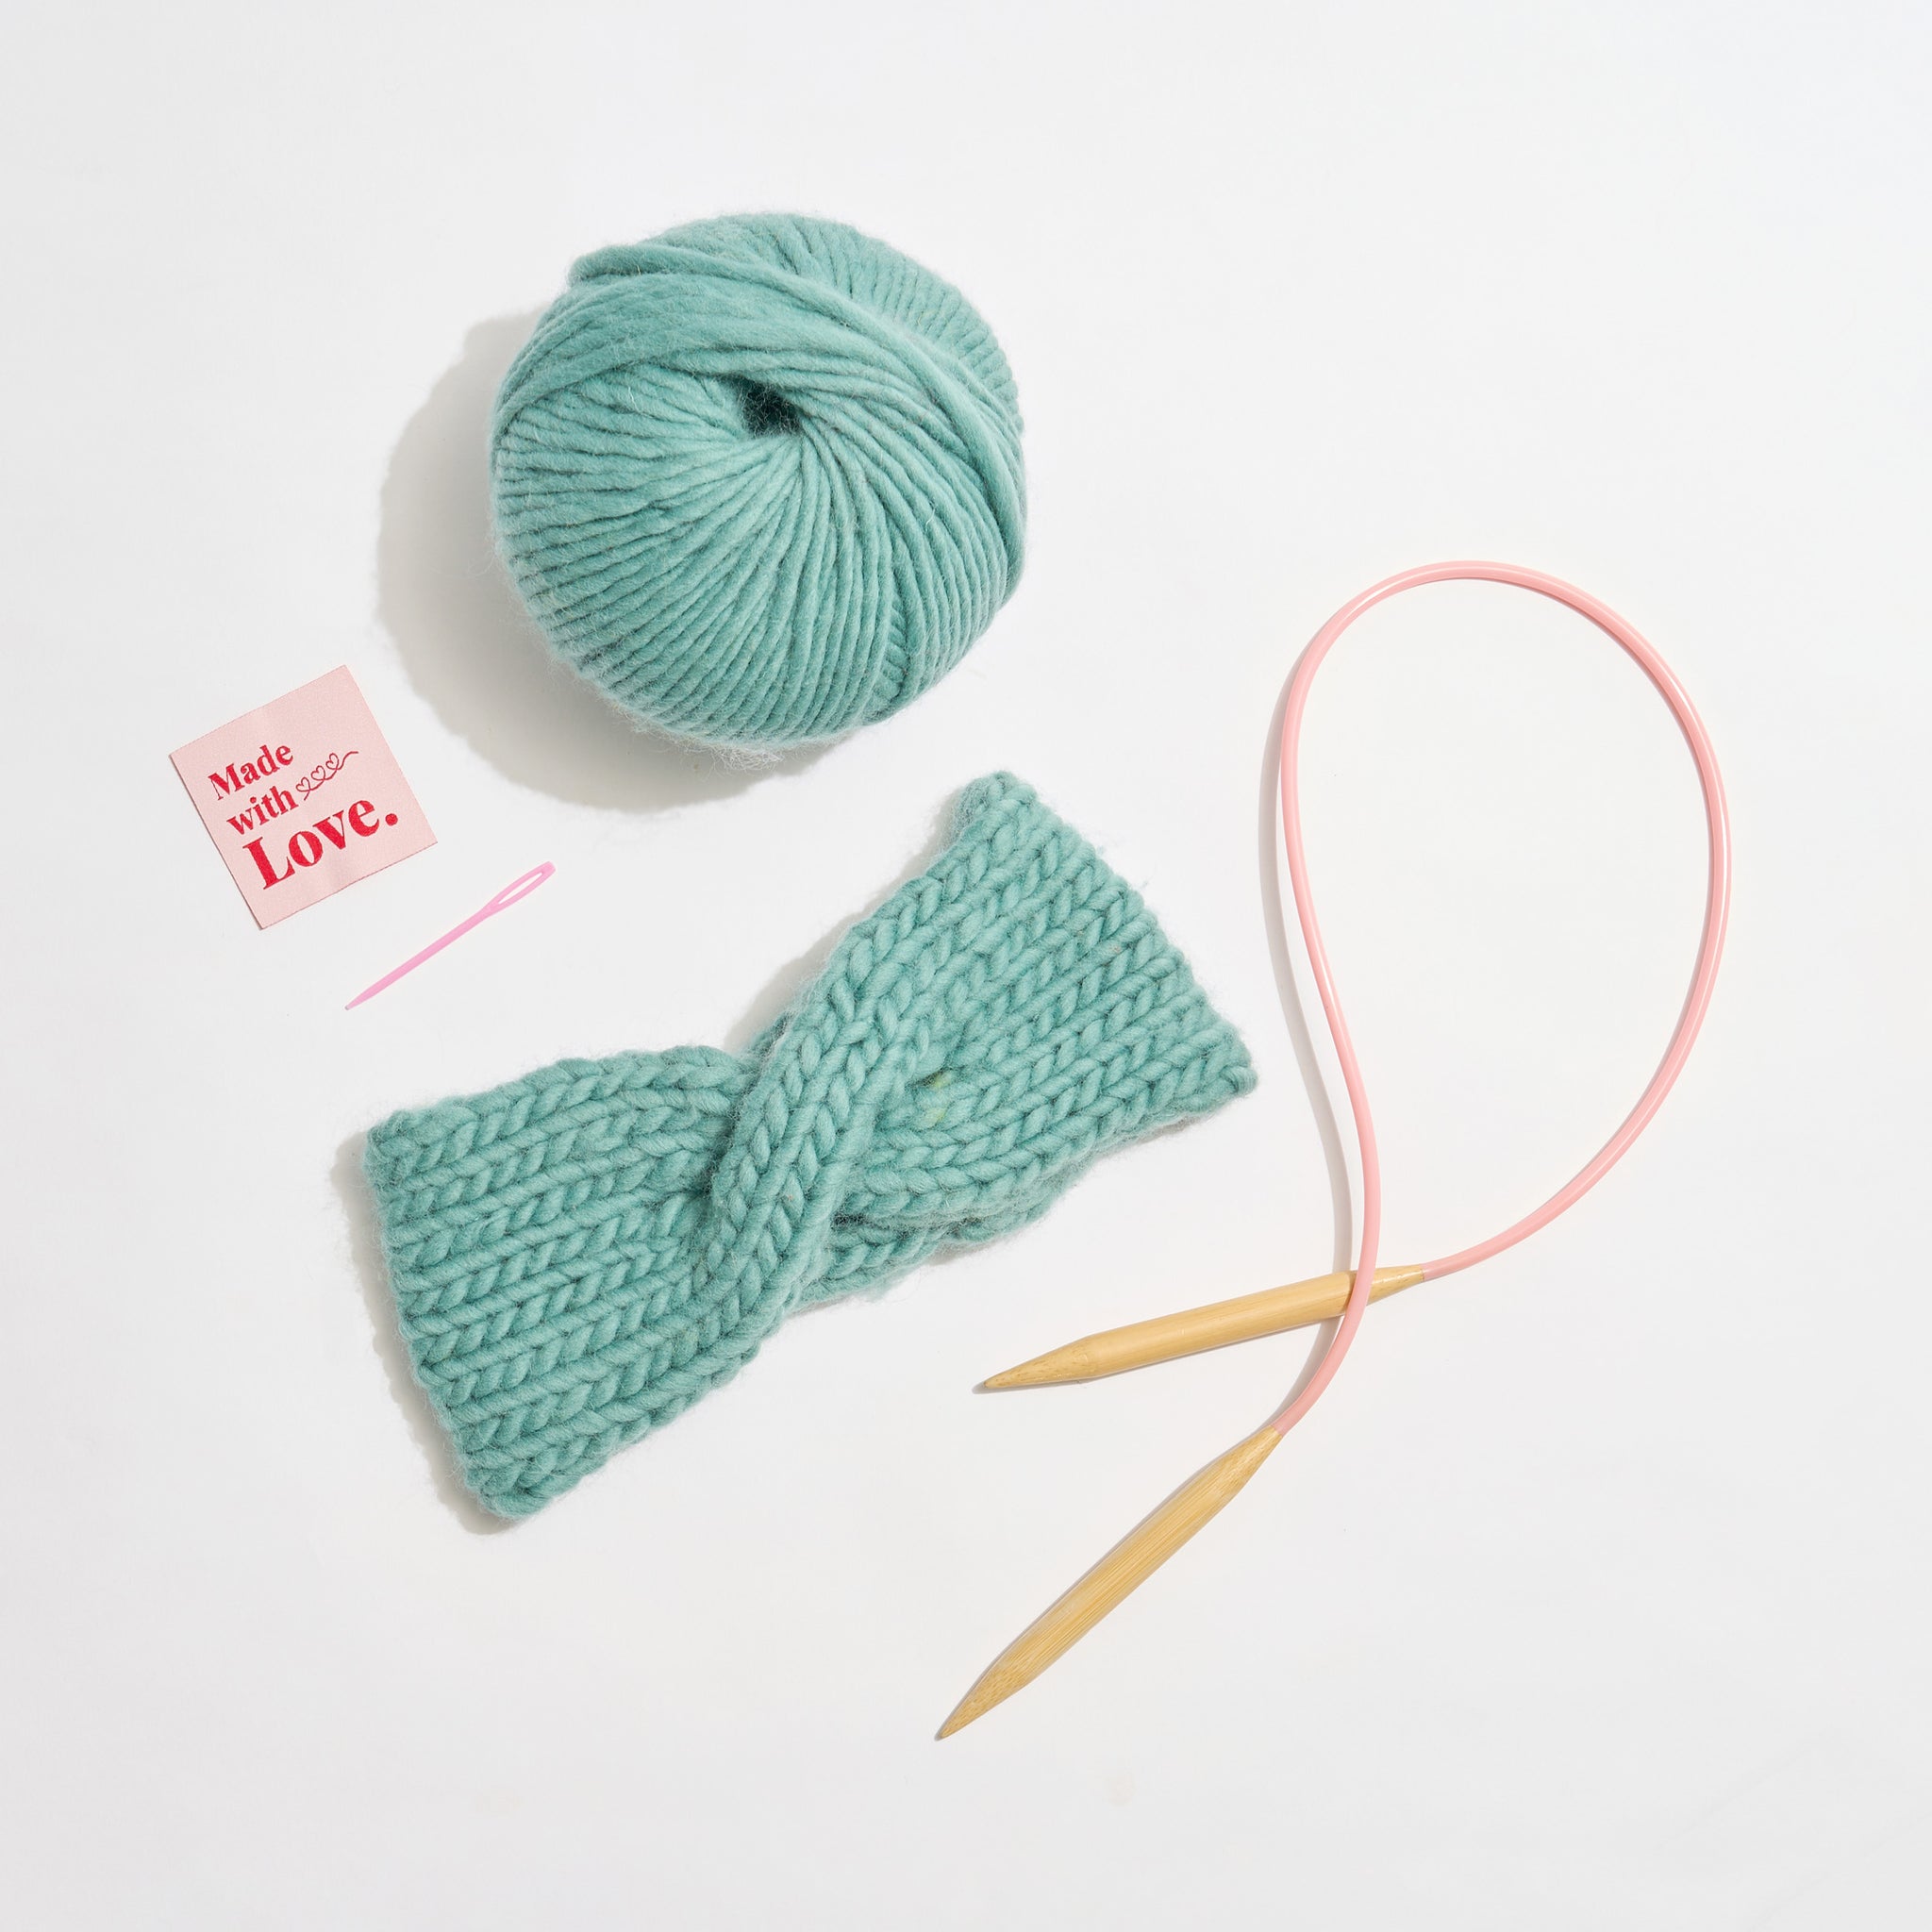 Knitting Kit- The Twisted Headband